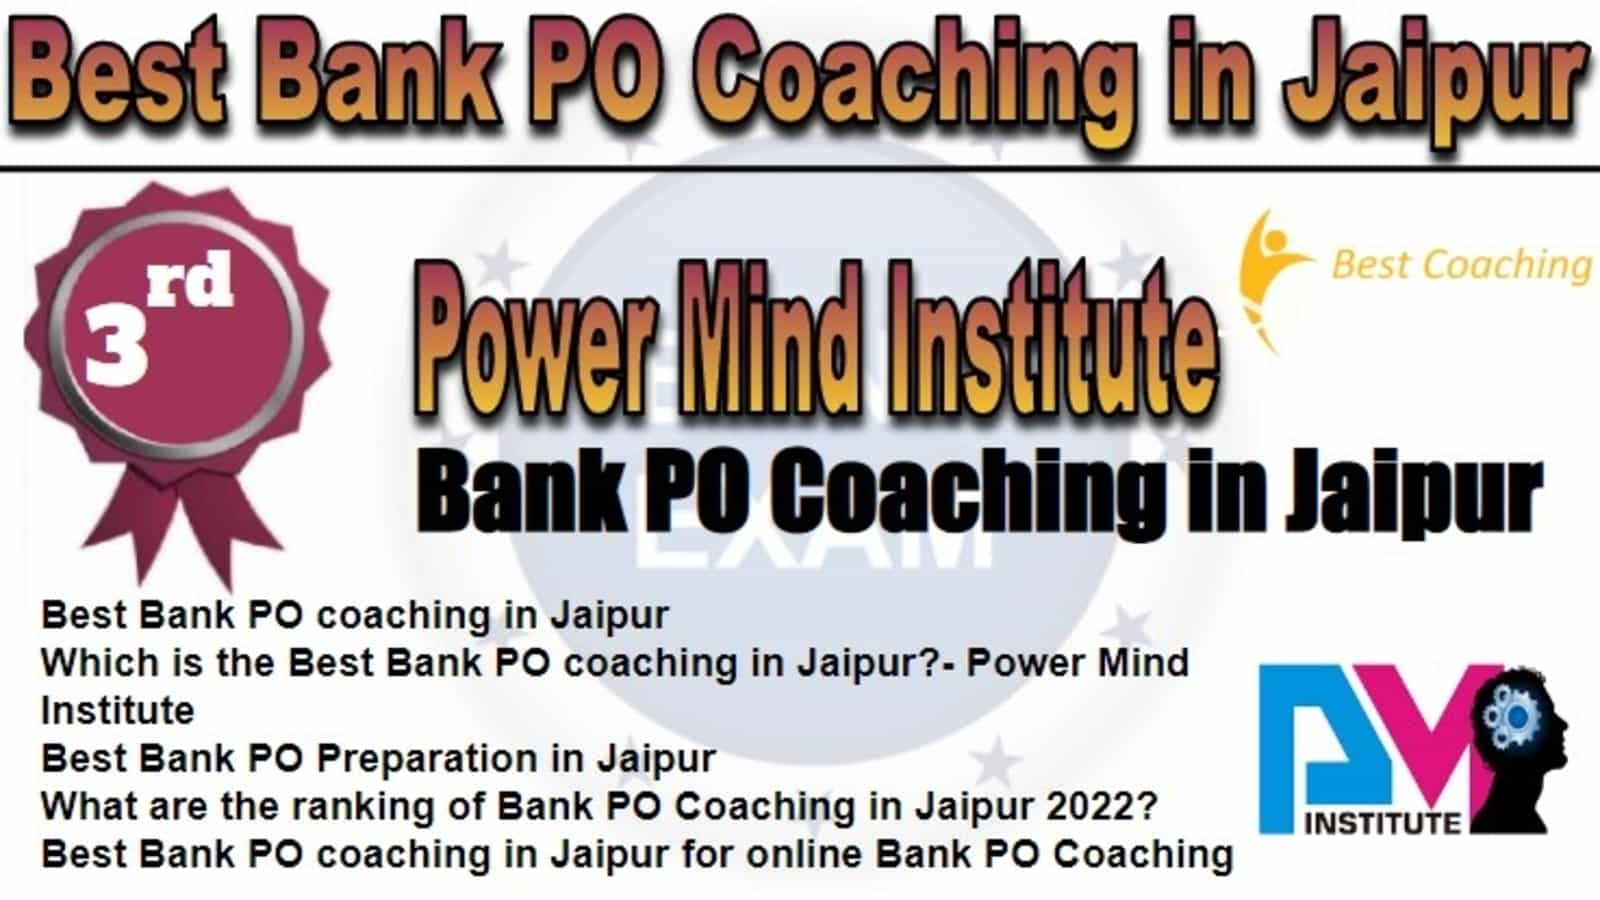 Rank 3 Best Bank PO Coaching in Jaipur